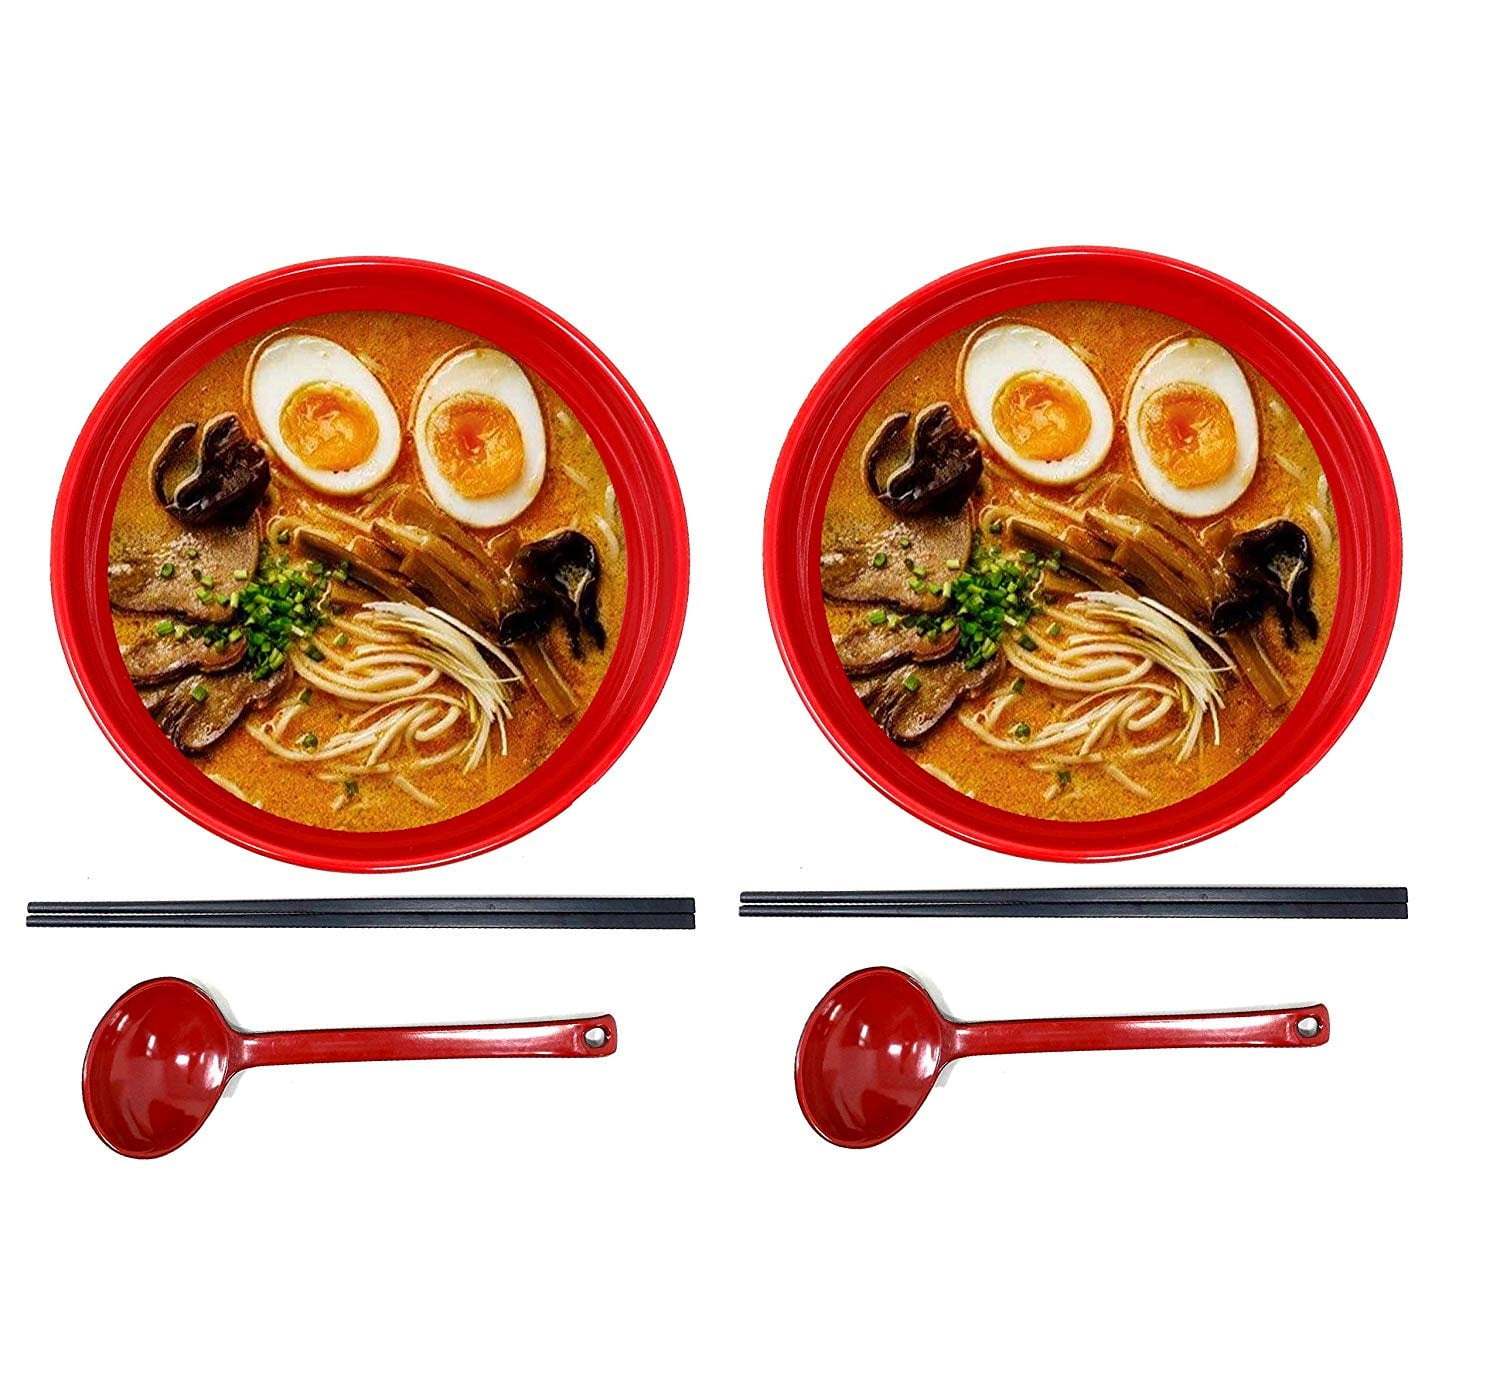 Soup Bowls 28 Oz Red Black Large Melamine Ramen Noodle With Spoons Set Of 4 